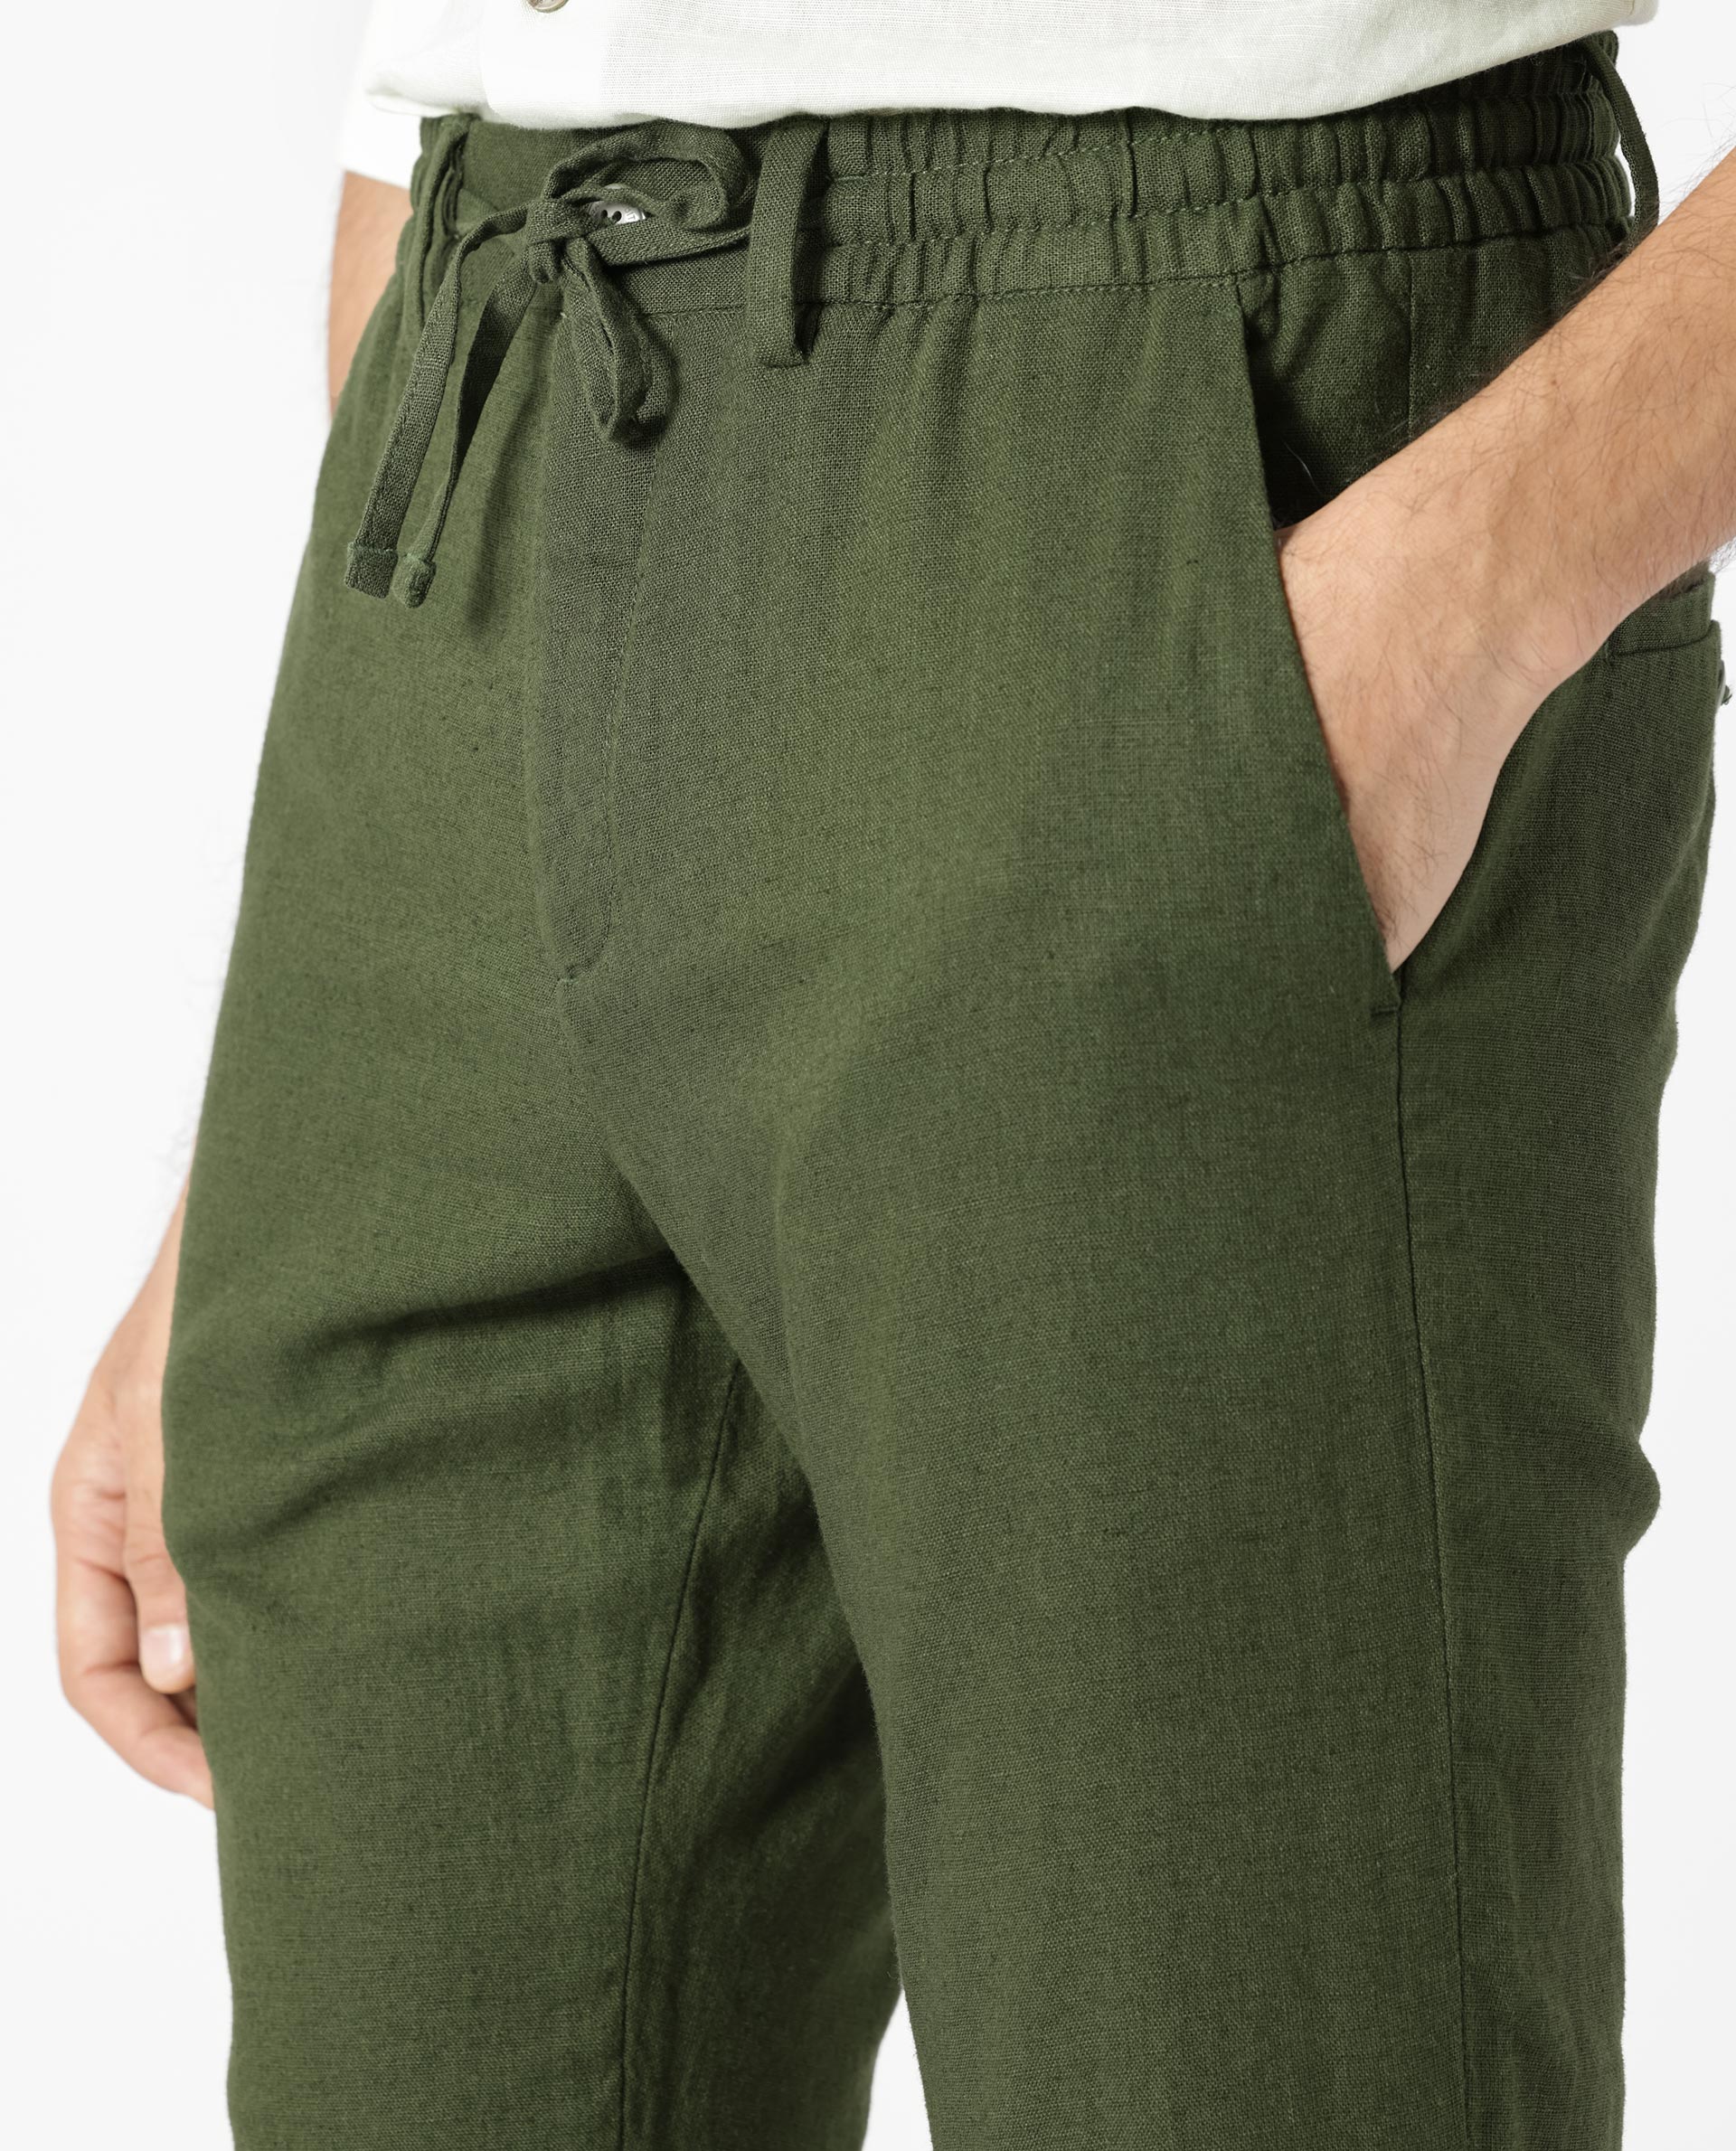 PMUYBHF Black Cargo Pants Men Big and Tall 4X Mens Loose Cotton Plus Size  Pocket Lace Up Elastic Waist Pants Trousers Overall L Cargo Pants Men Slim  Straight - Walmart.com